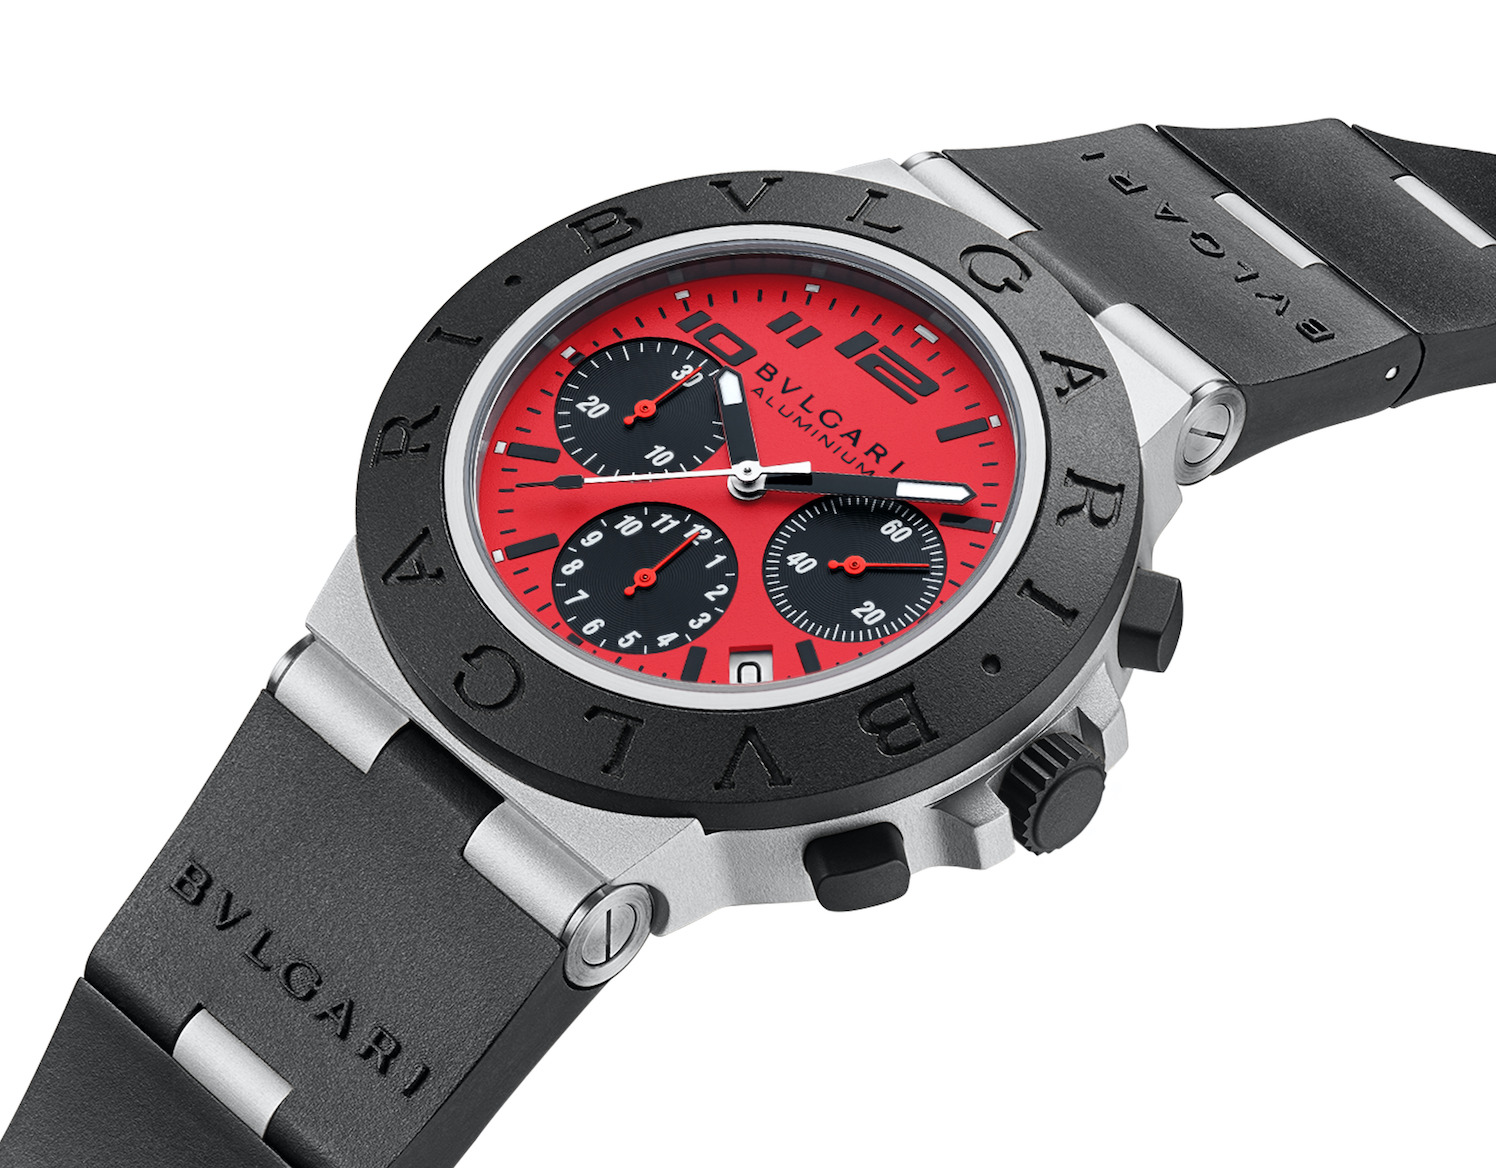 Bulgari Aluminium Chronograph Ducati Special Edition watch